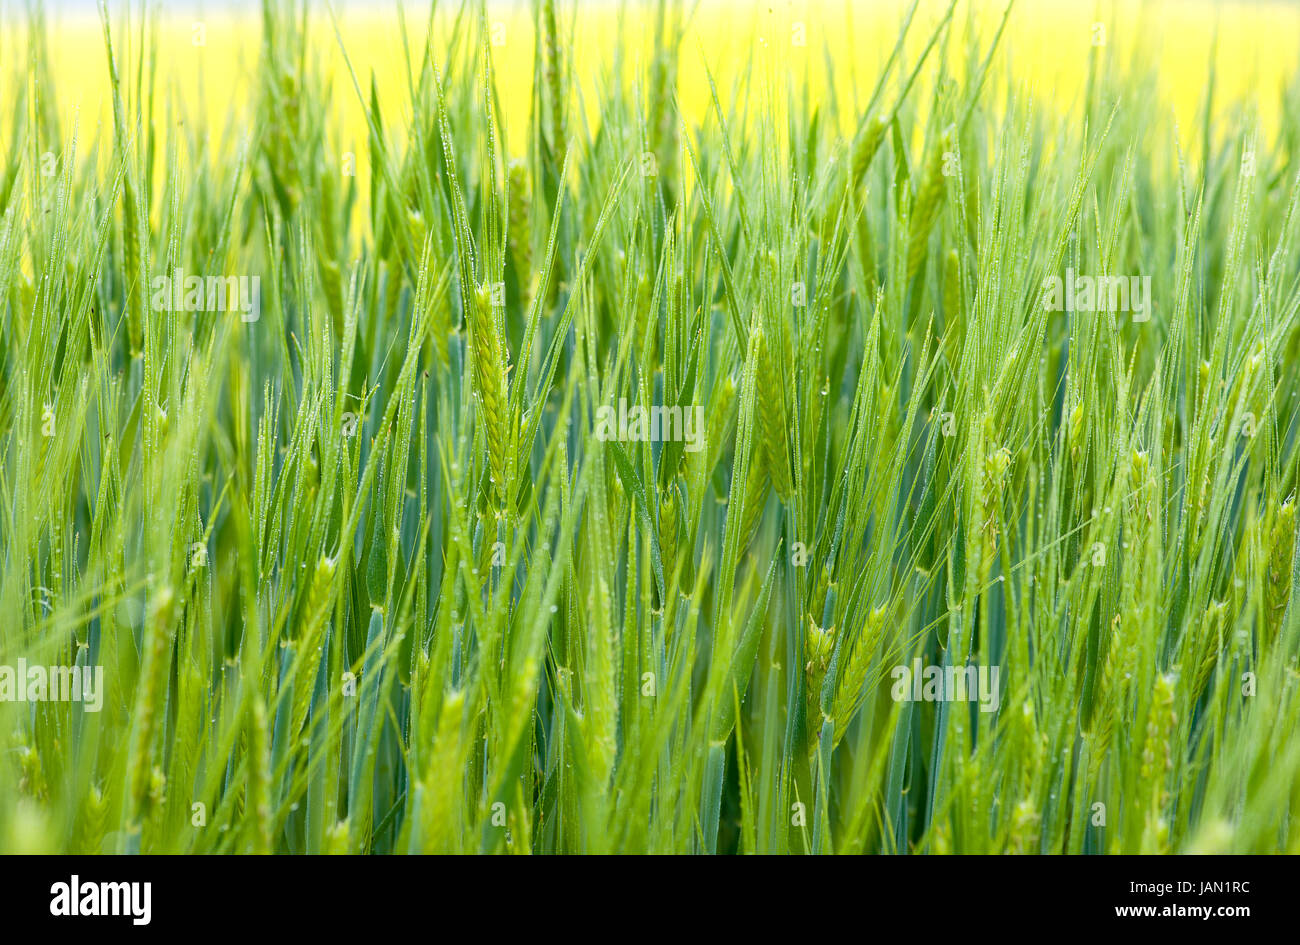 Fresco verde erba di frumento con gocce Foto Stock